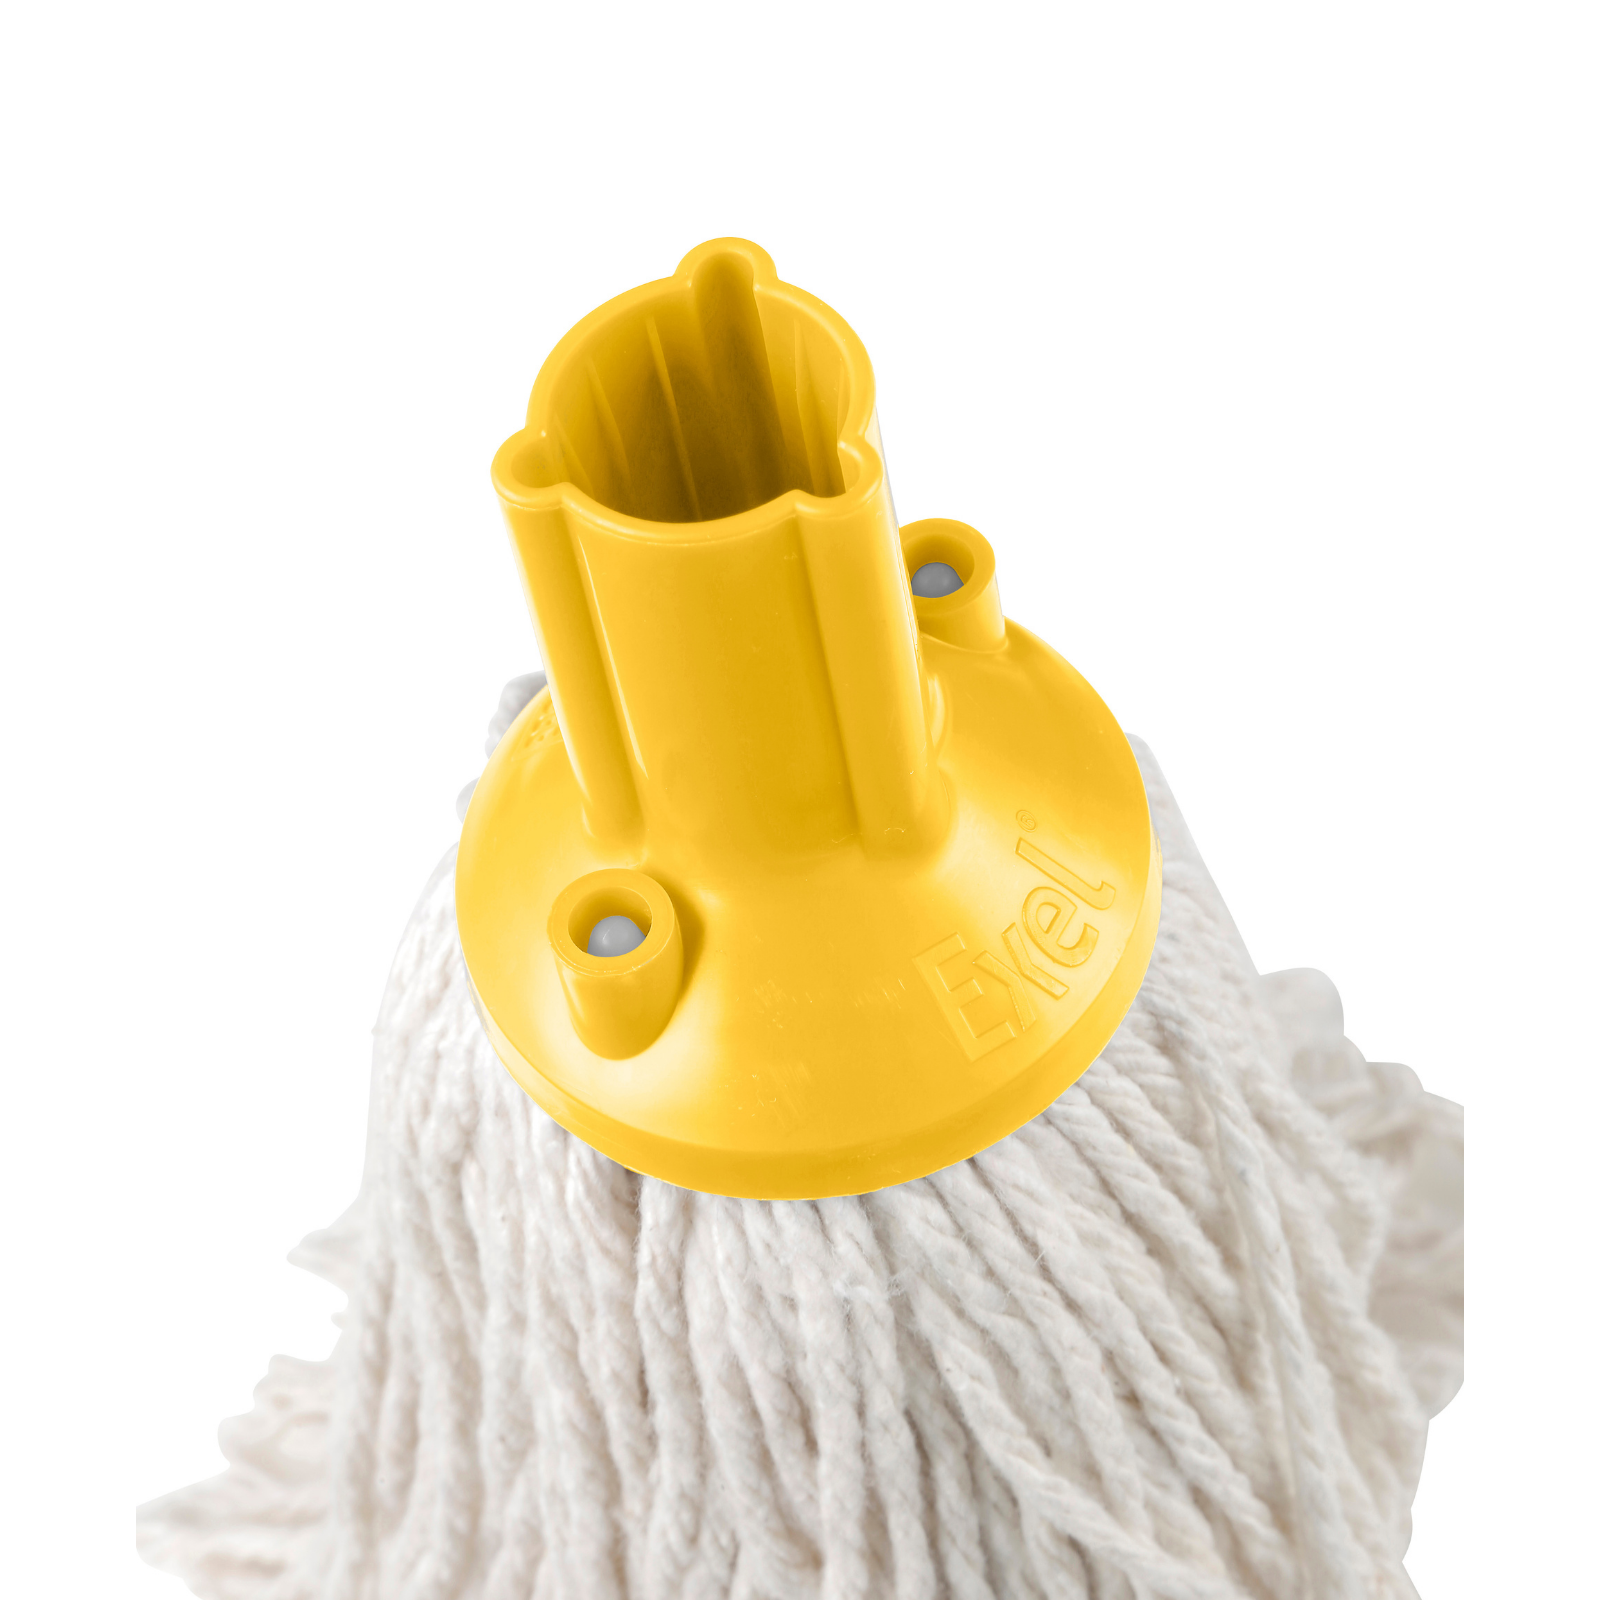 Exel 200g PY Yarn Socket Mops - Yellow